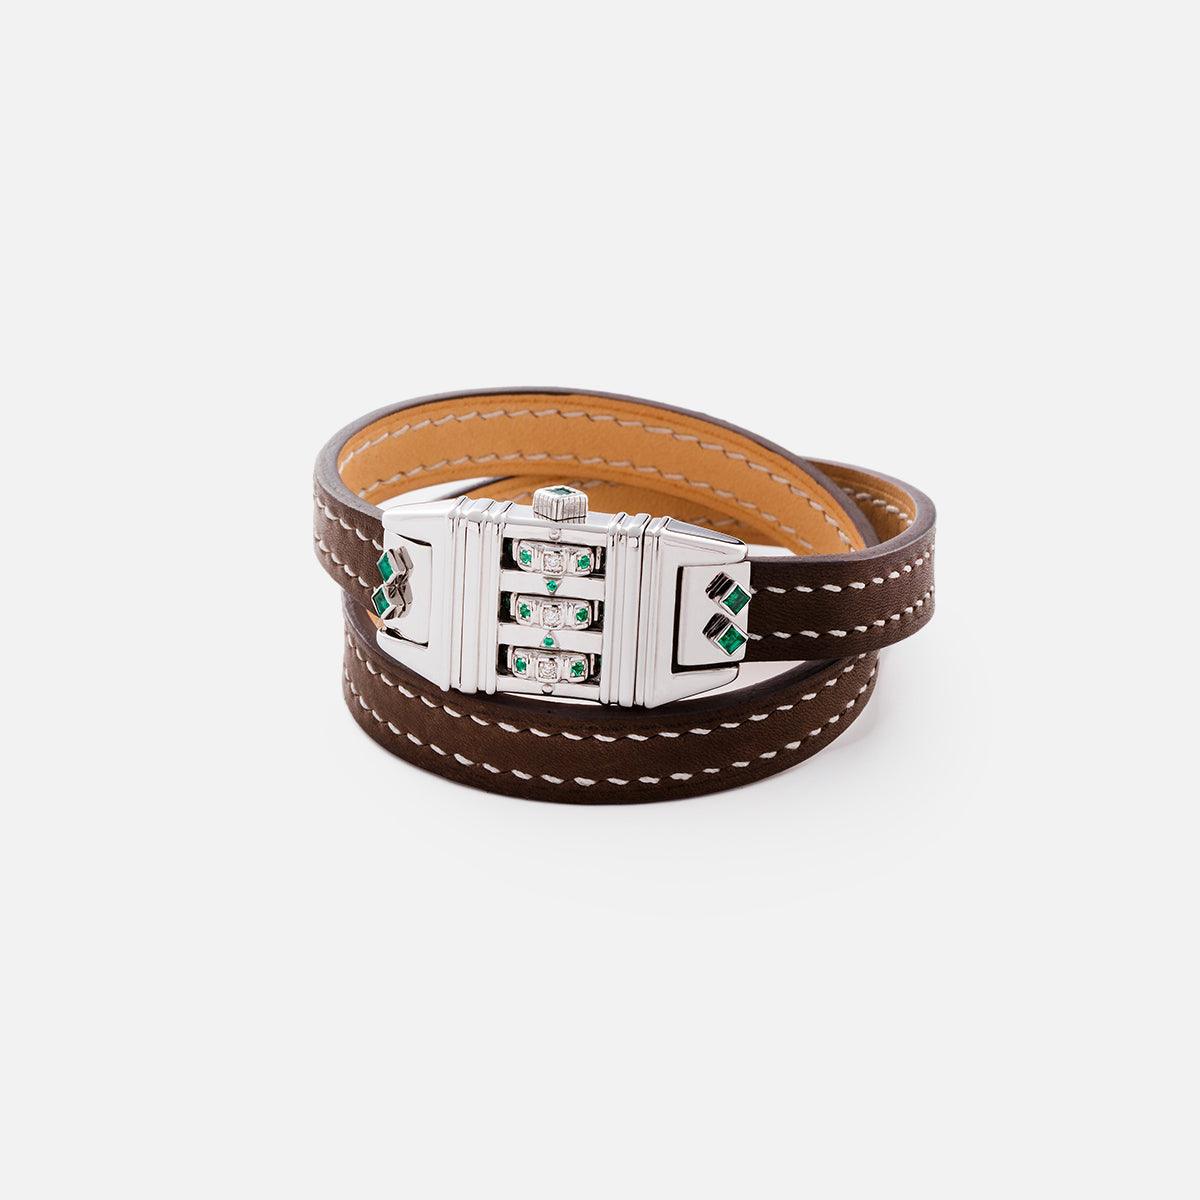 James Banks Design Code Bracelet, Dark Brown Leather - At Present Jewelry